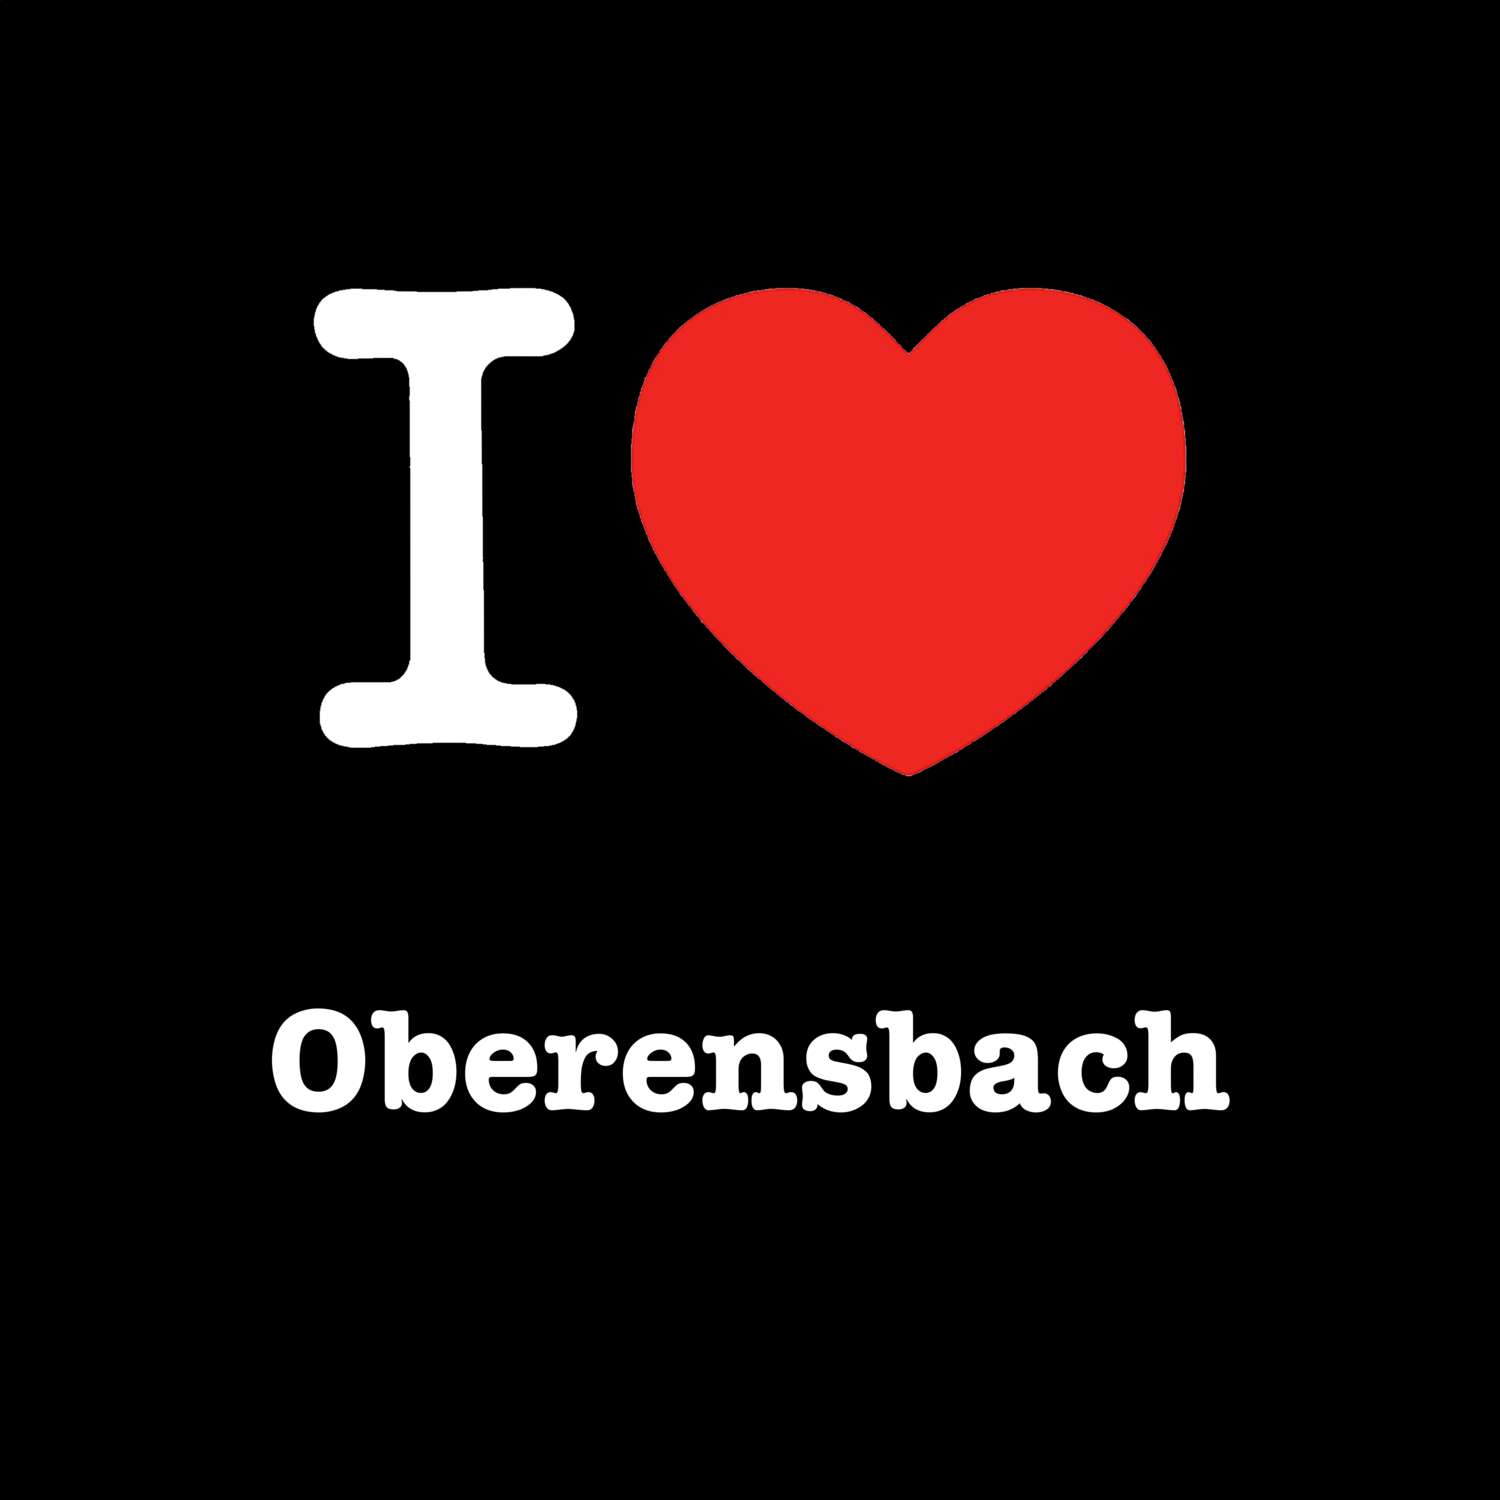 Oberensbach T-Shirt »I love«